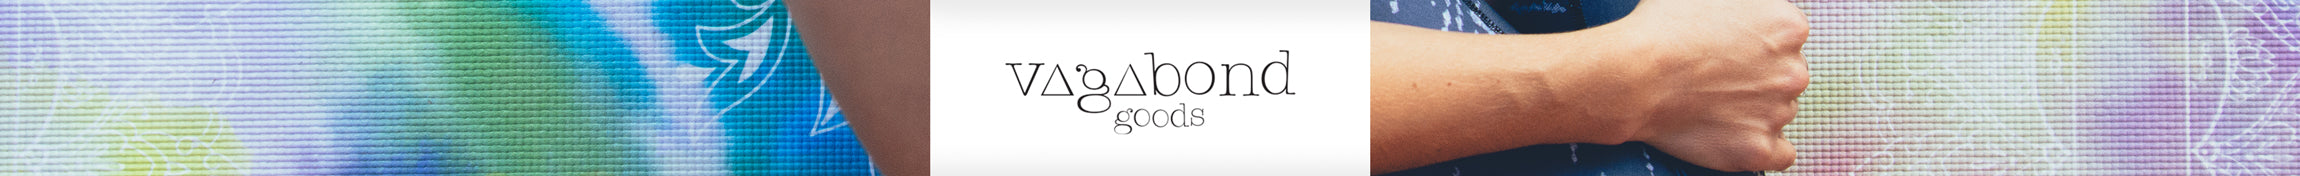 Vagabond Goods